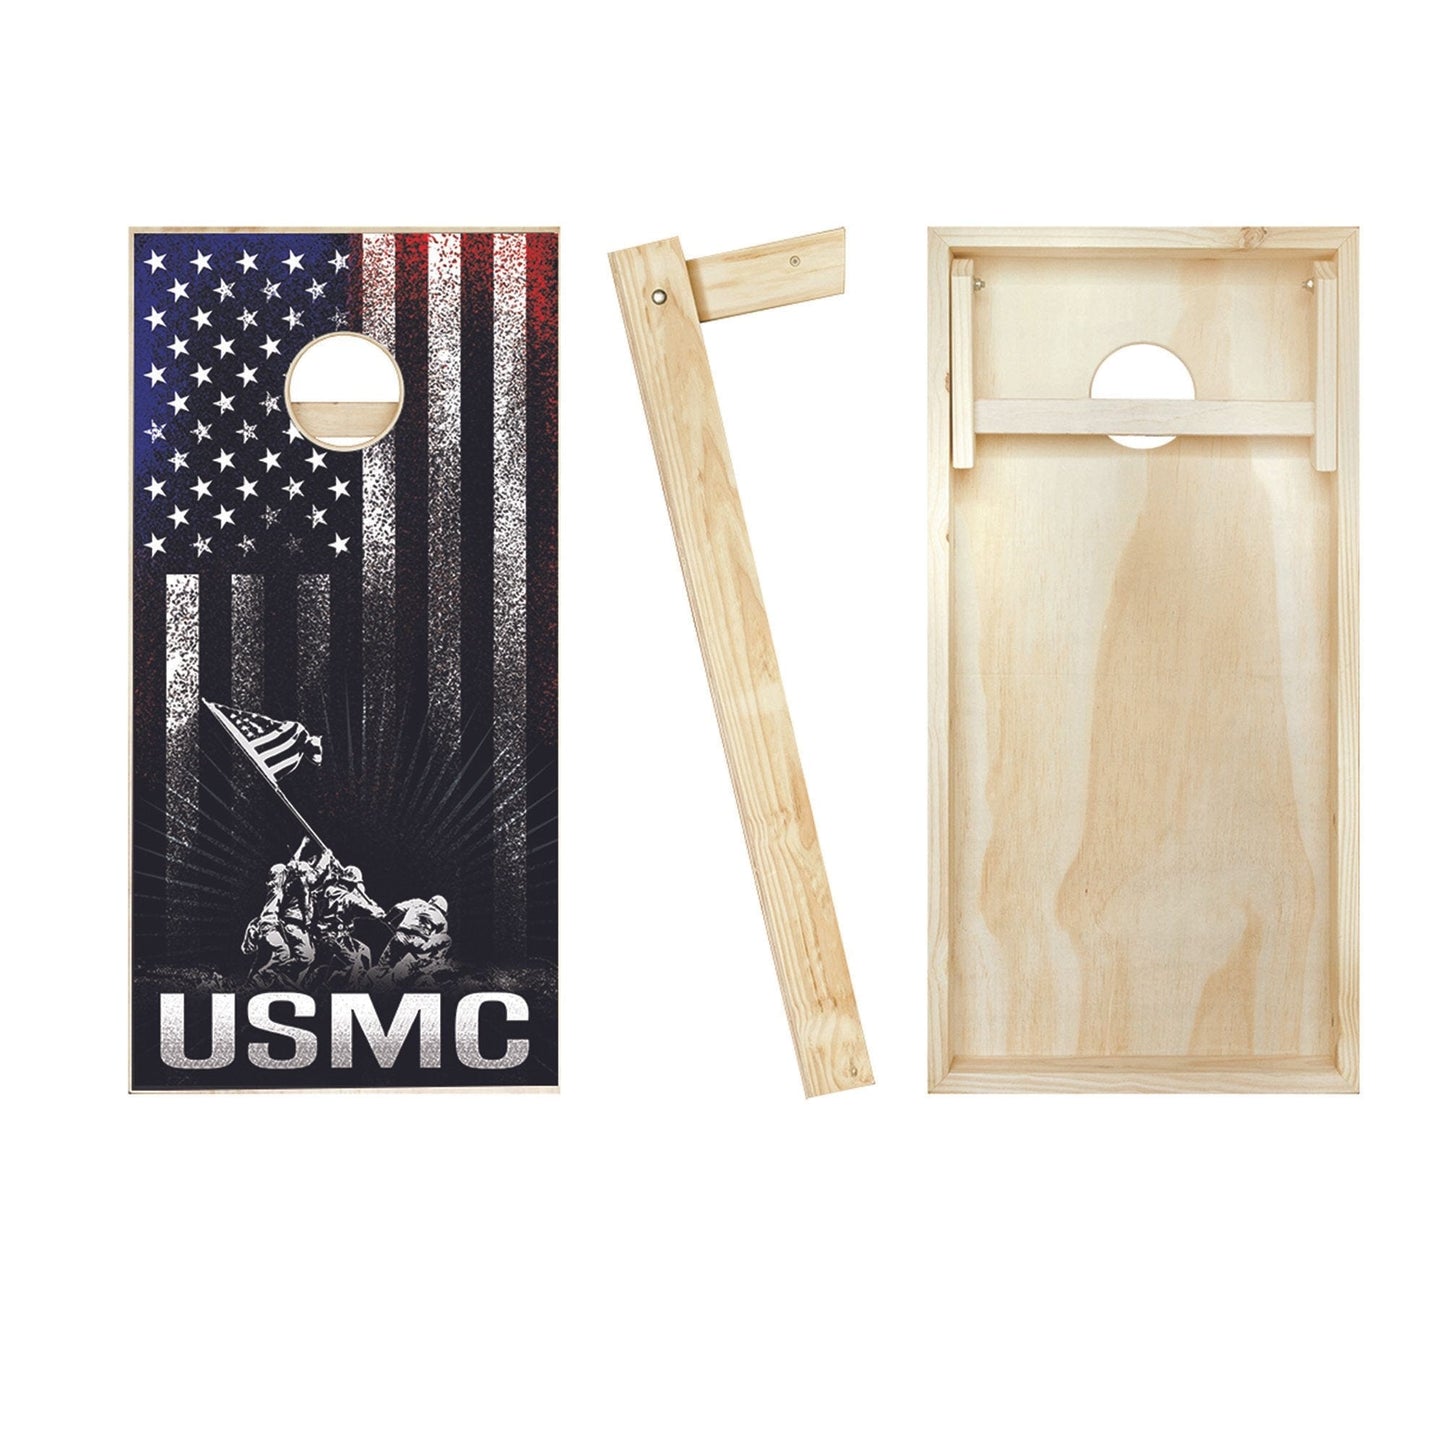 USMC Hanging Stripes 2x4 board specs